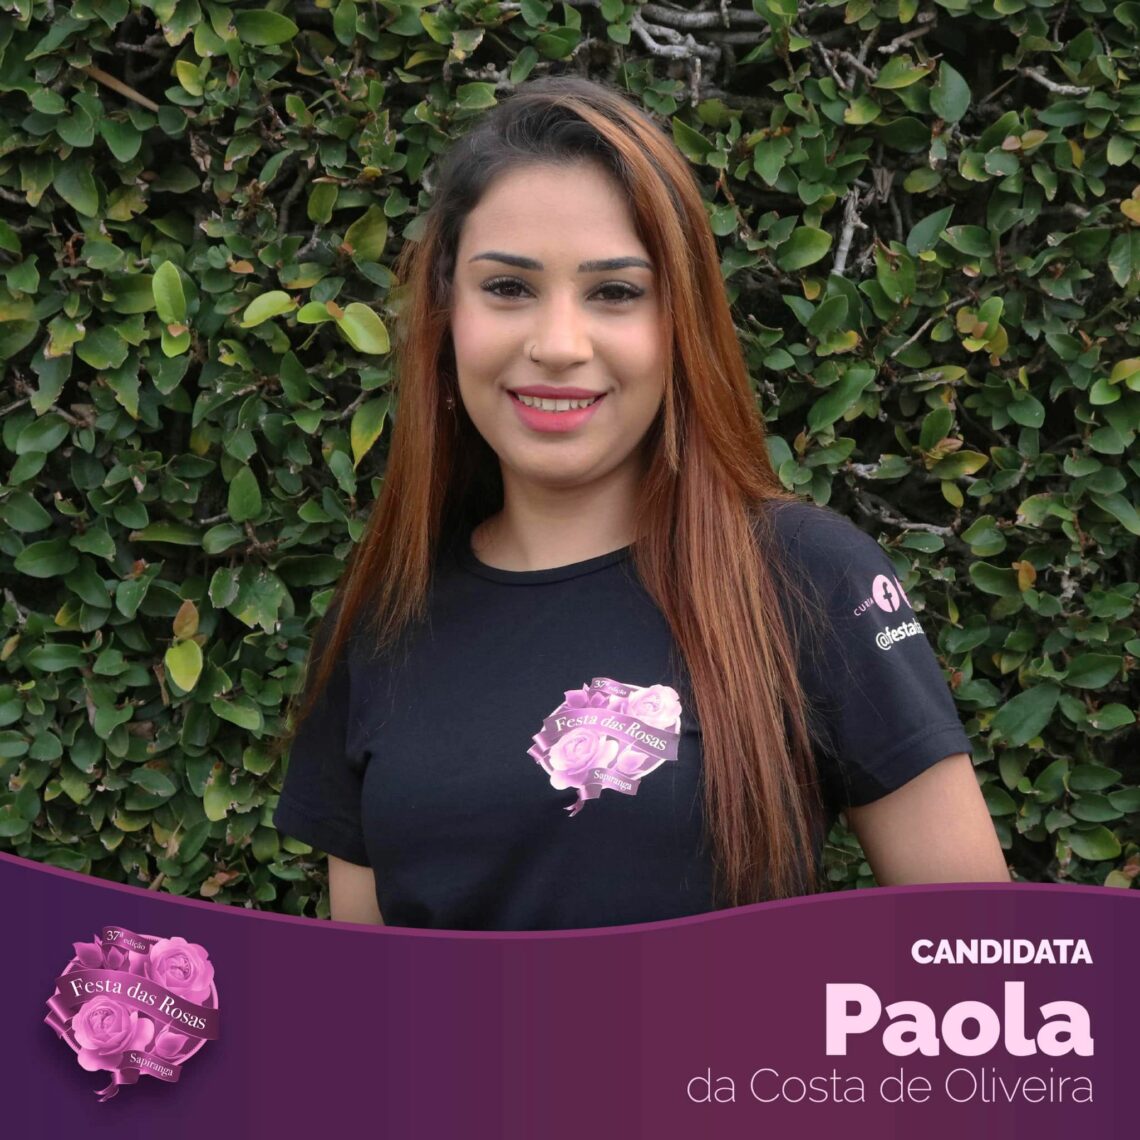 Paola da Costa de Oliveira 21 anos - Moradora do bairro Vila Irma